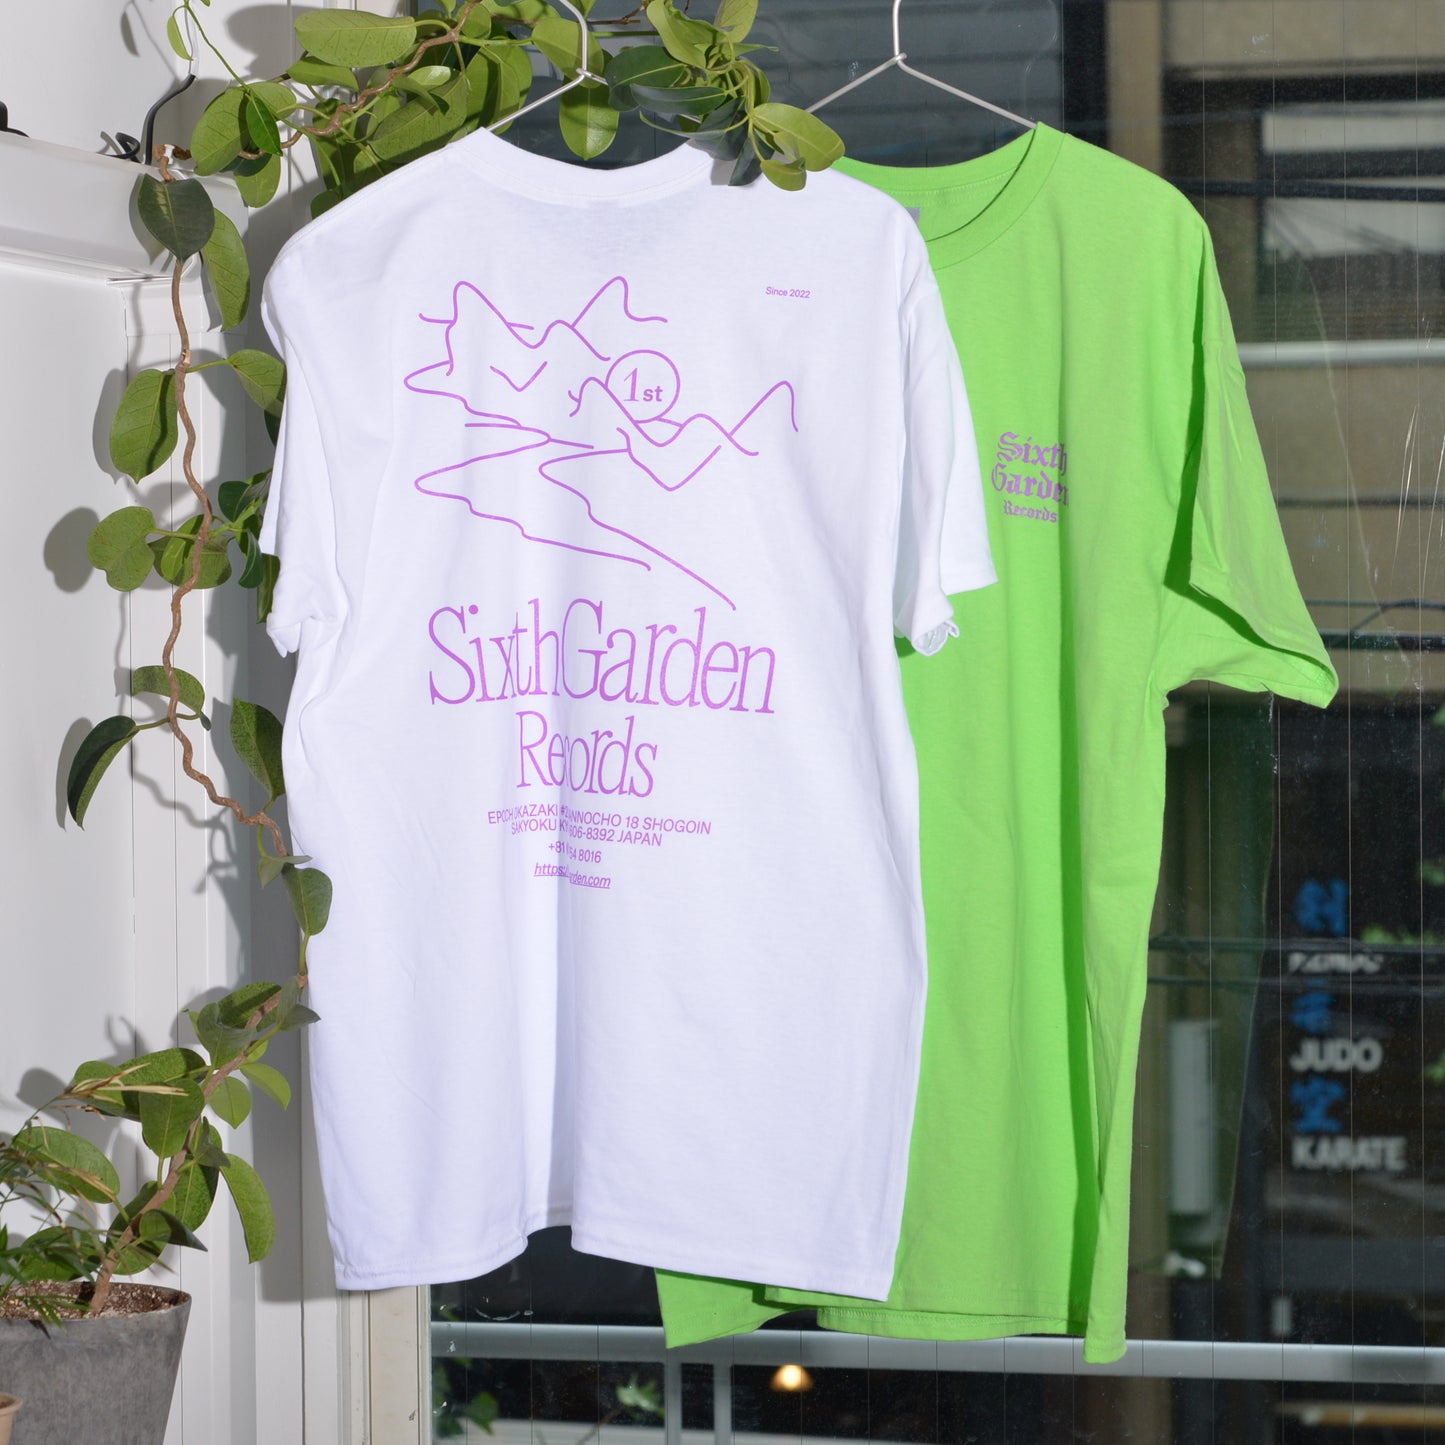 Sixth Garden Records 1st Anniversary T-shirt (off white)